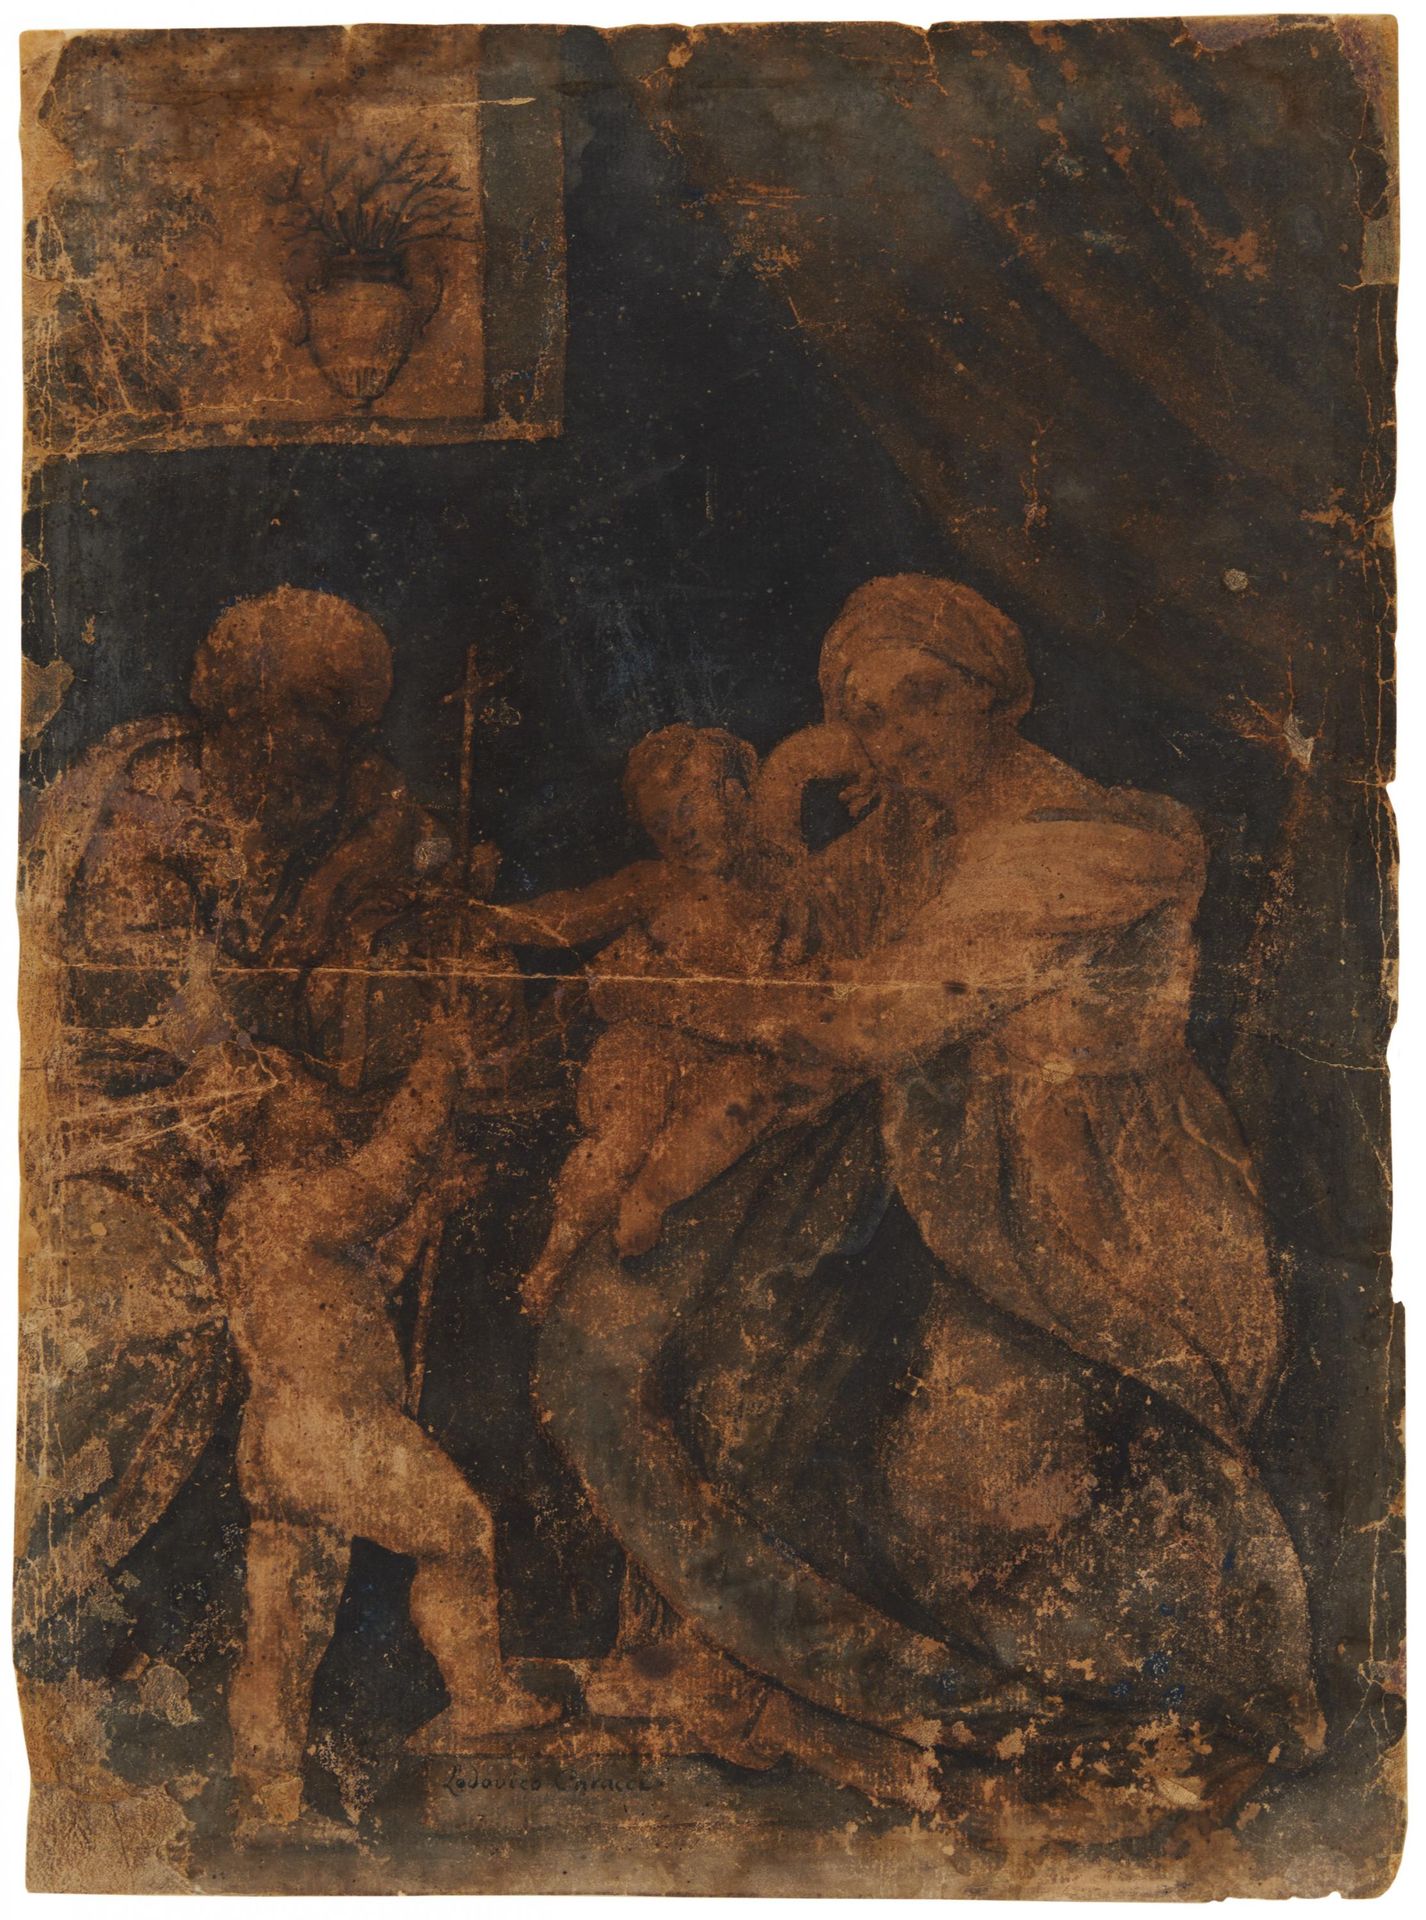 GUIDO RENI RENI, GUIDO
1575 Calvenzano - 1642 Bologna

Kopie nach
Titel: Heilige&hellip;